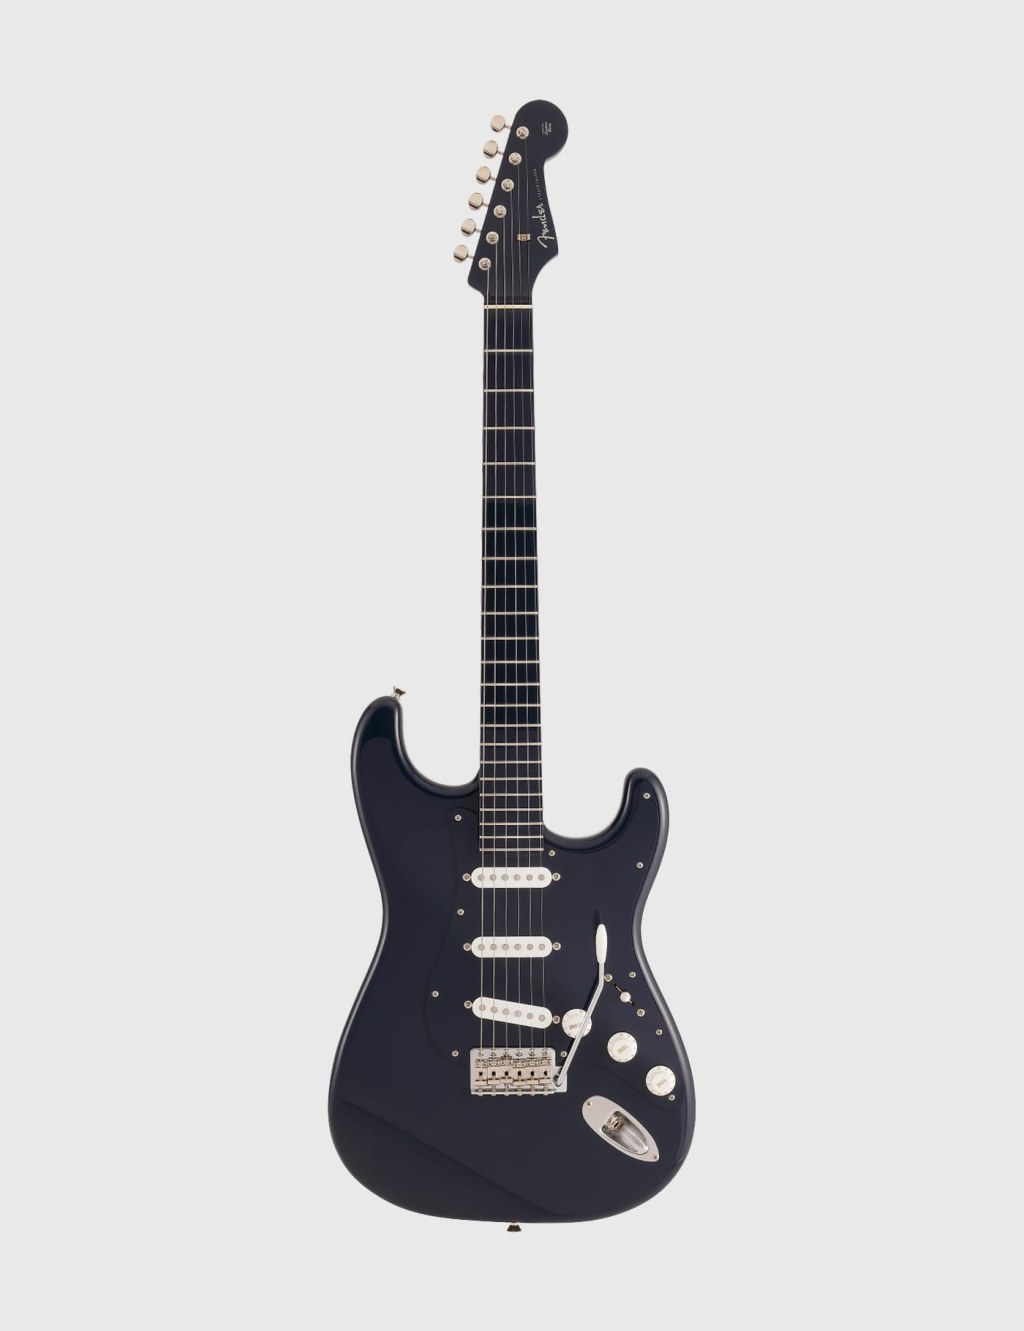 lifestyle x guitar - HYPEBEAST x Fender Stratocaster Guitar  HBX